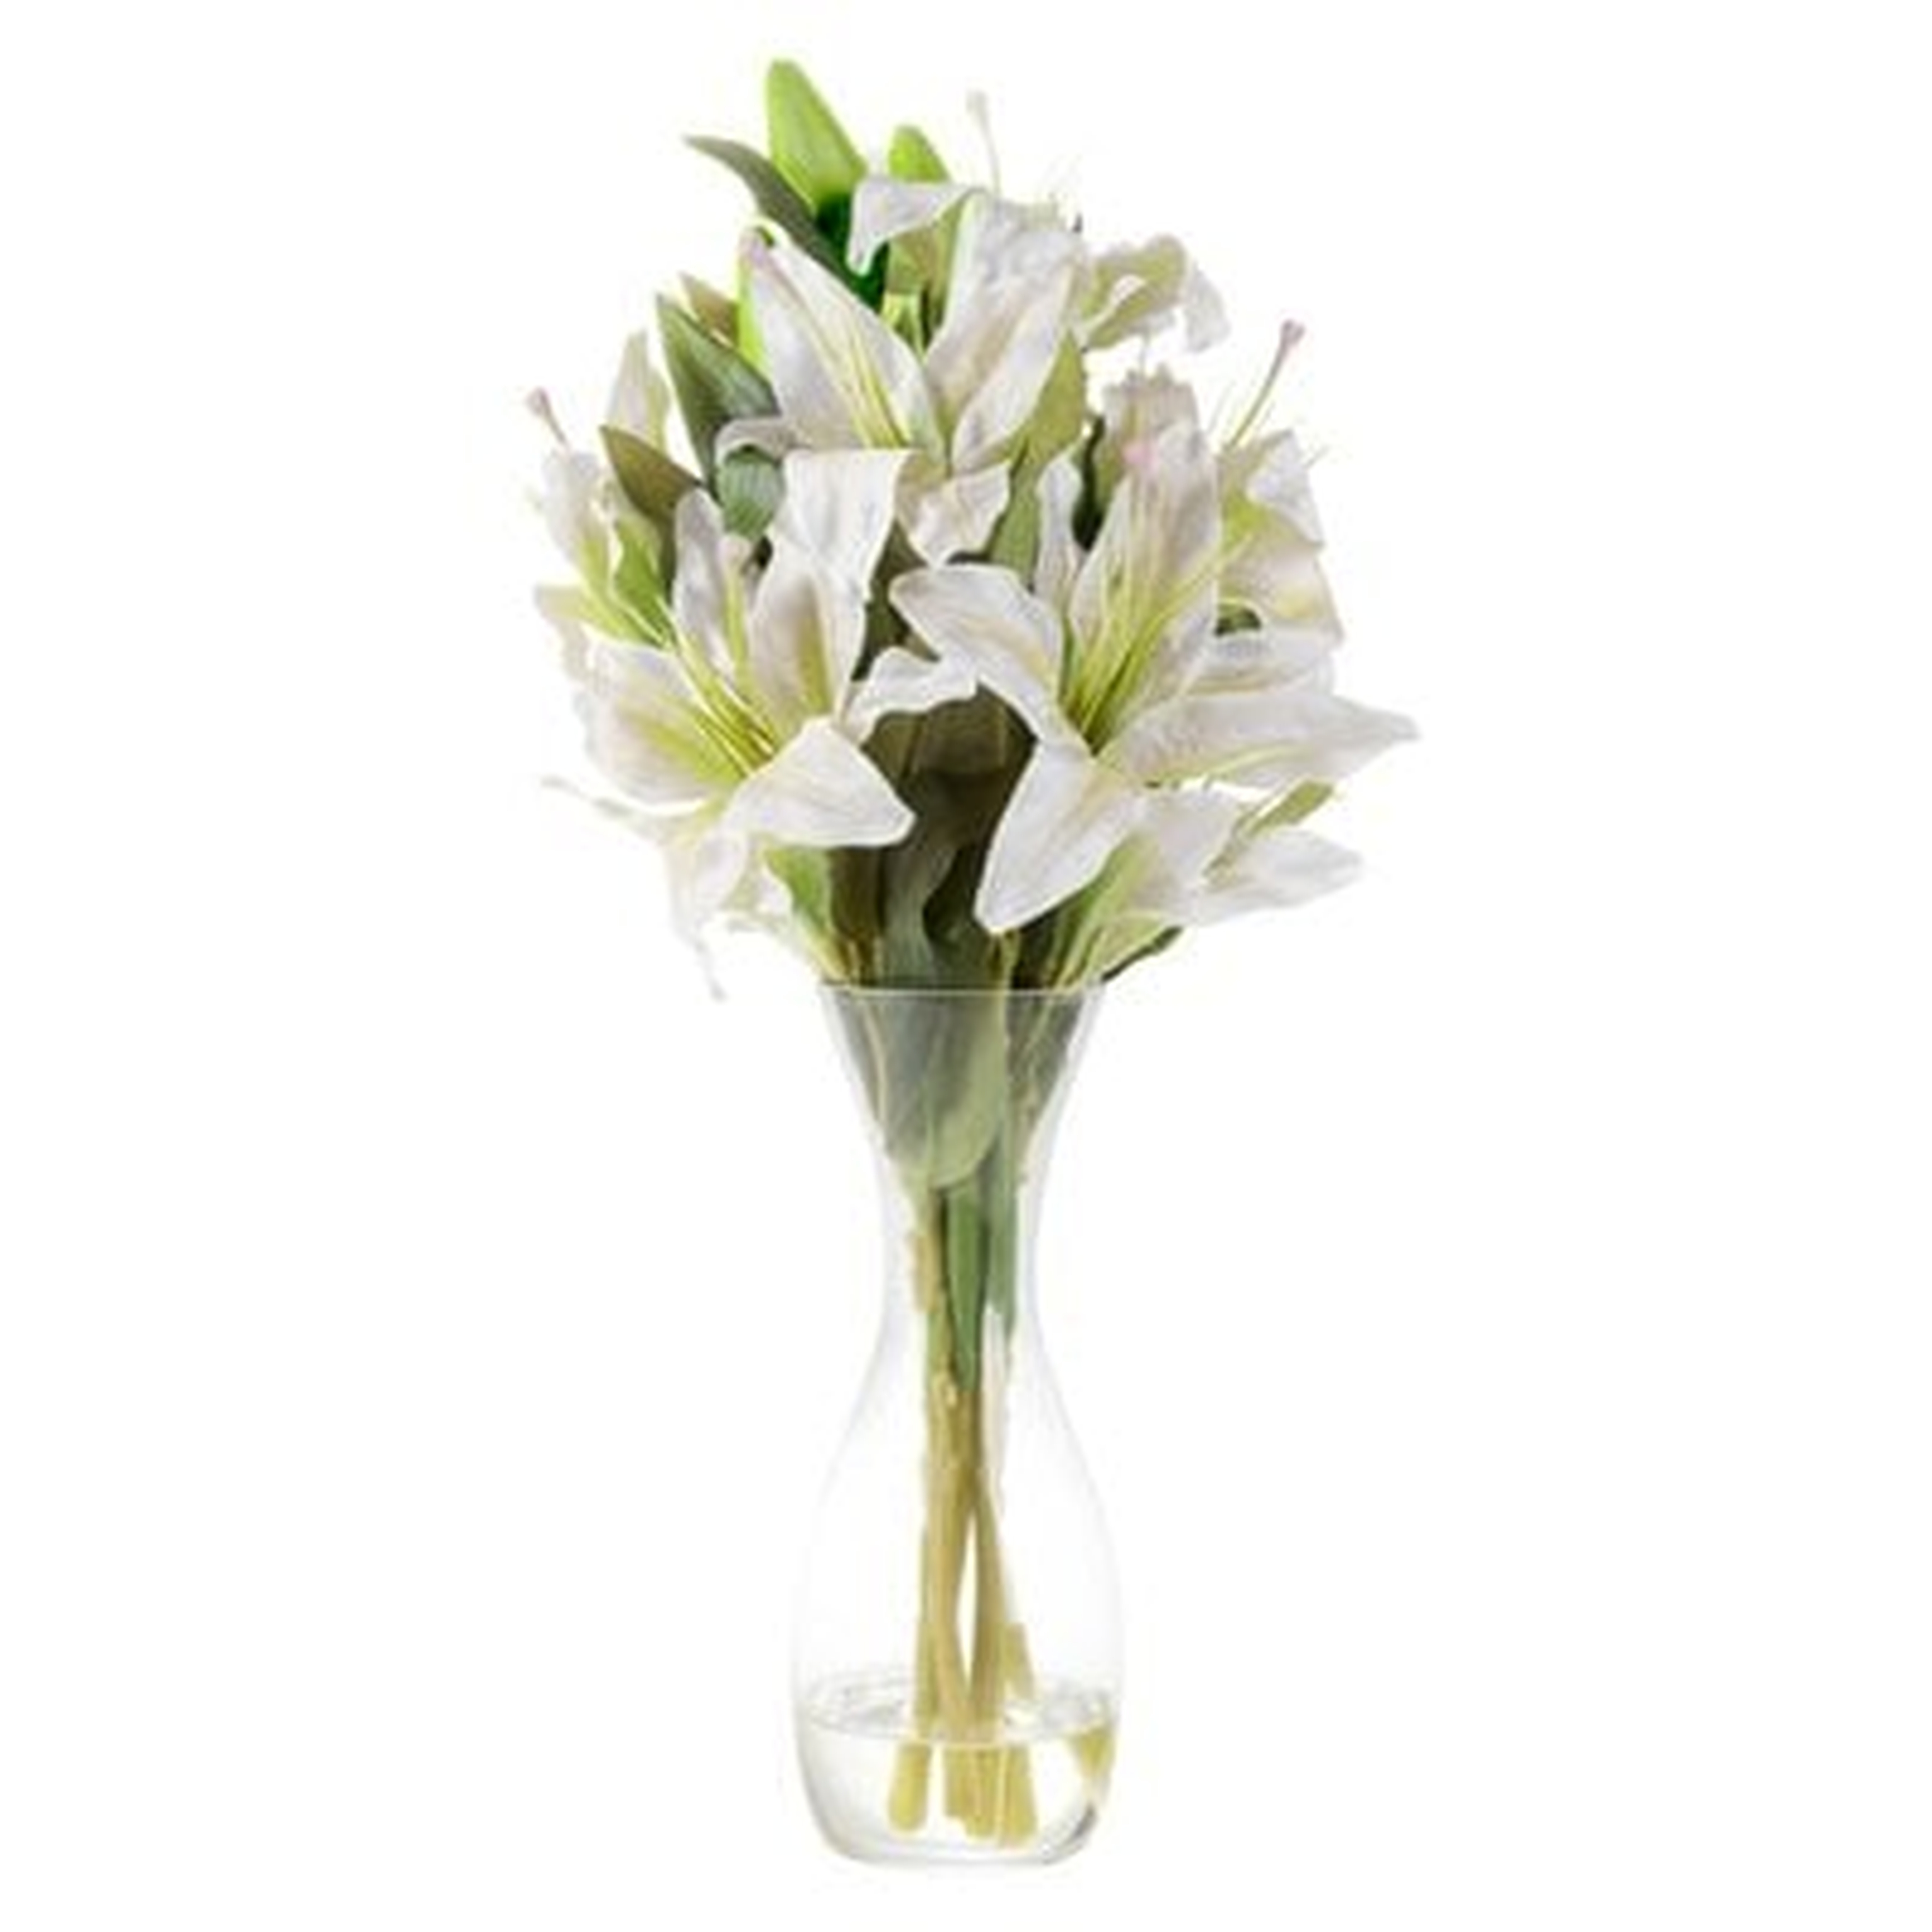 Tall Lily Floral Arrangement in Glass Vase - Birch Lane